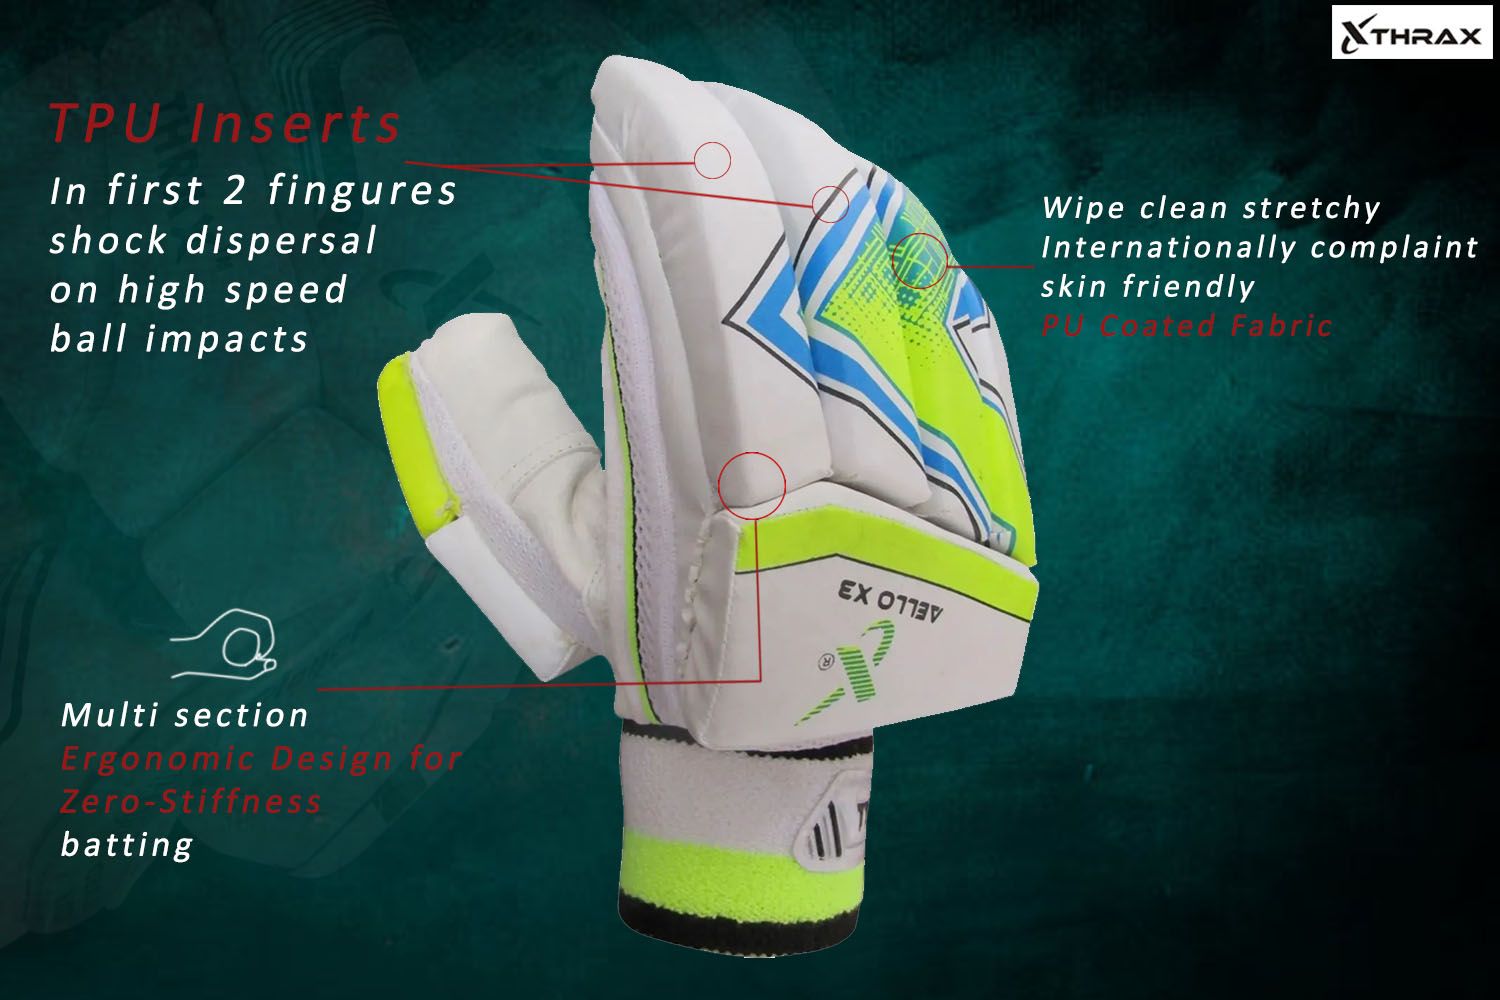 Thrax Aello X 3 Cricket Batting Gloves Standard Size Right Hand